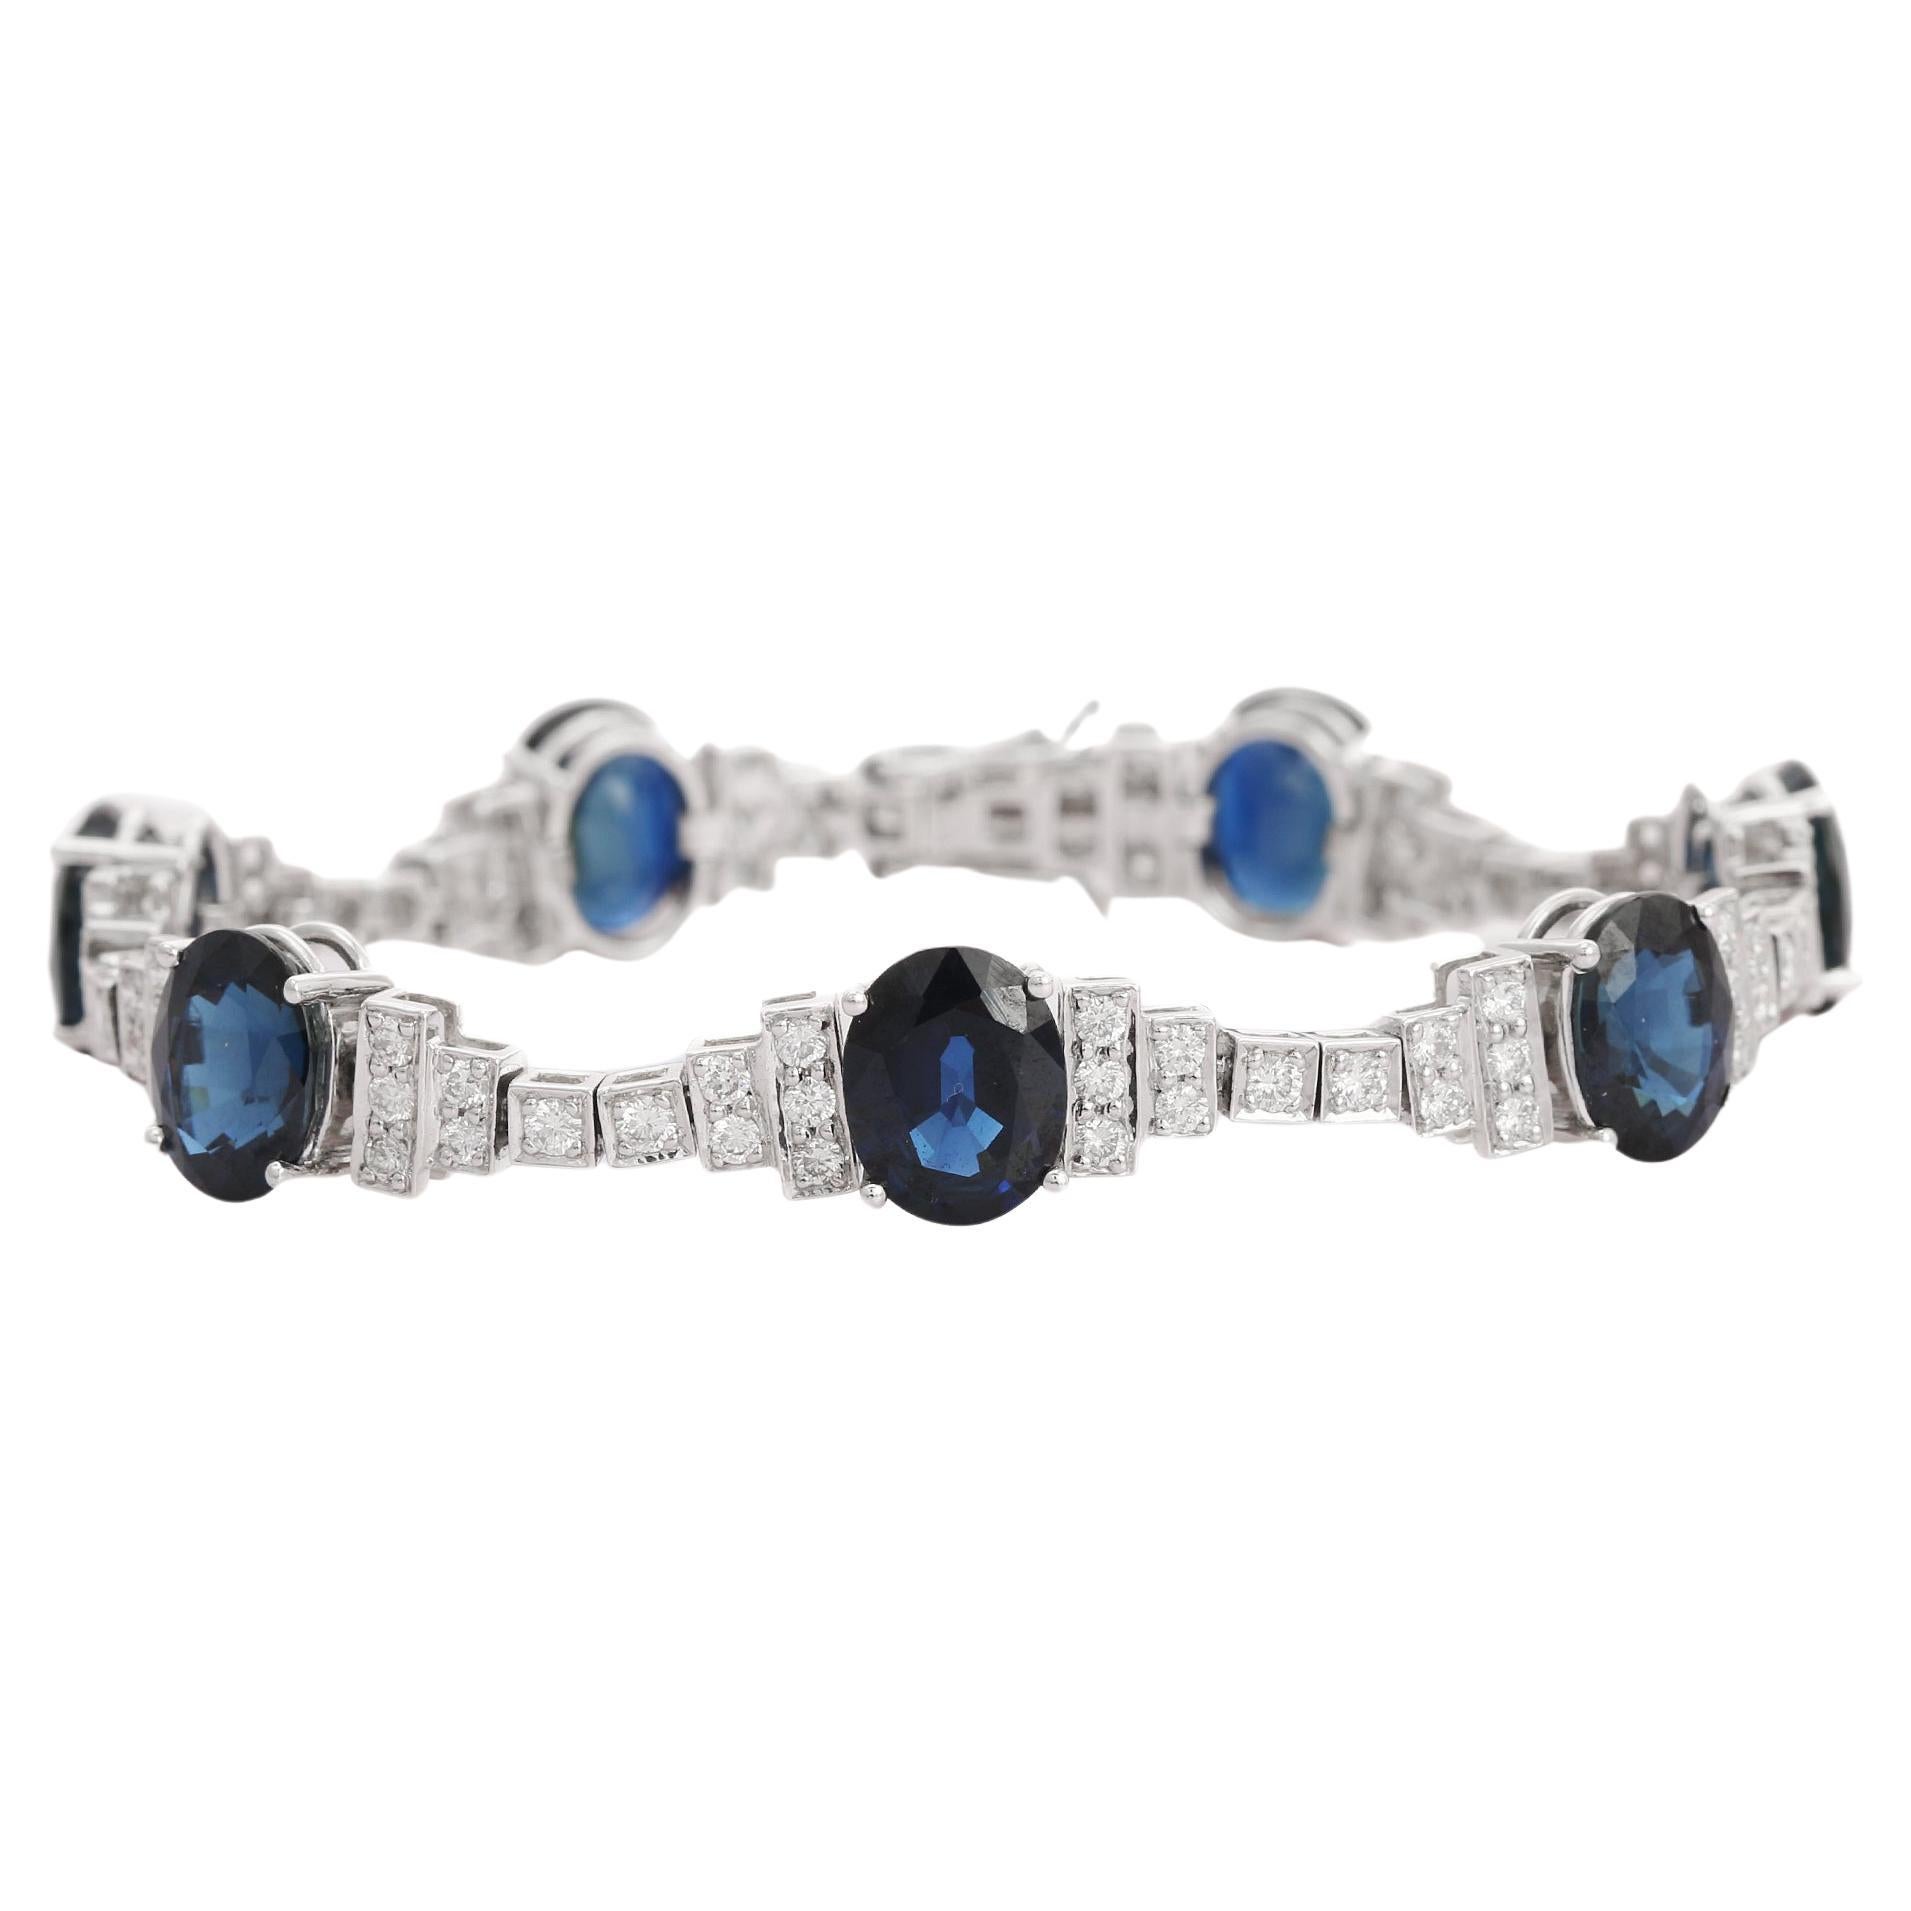 24 Carat Blue Sapphire Wedding Tennis Bracelet in 18K White Gold with Diamonds